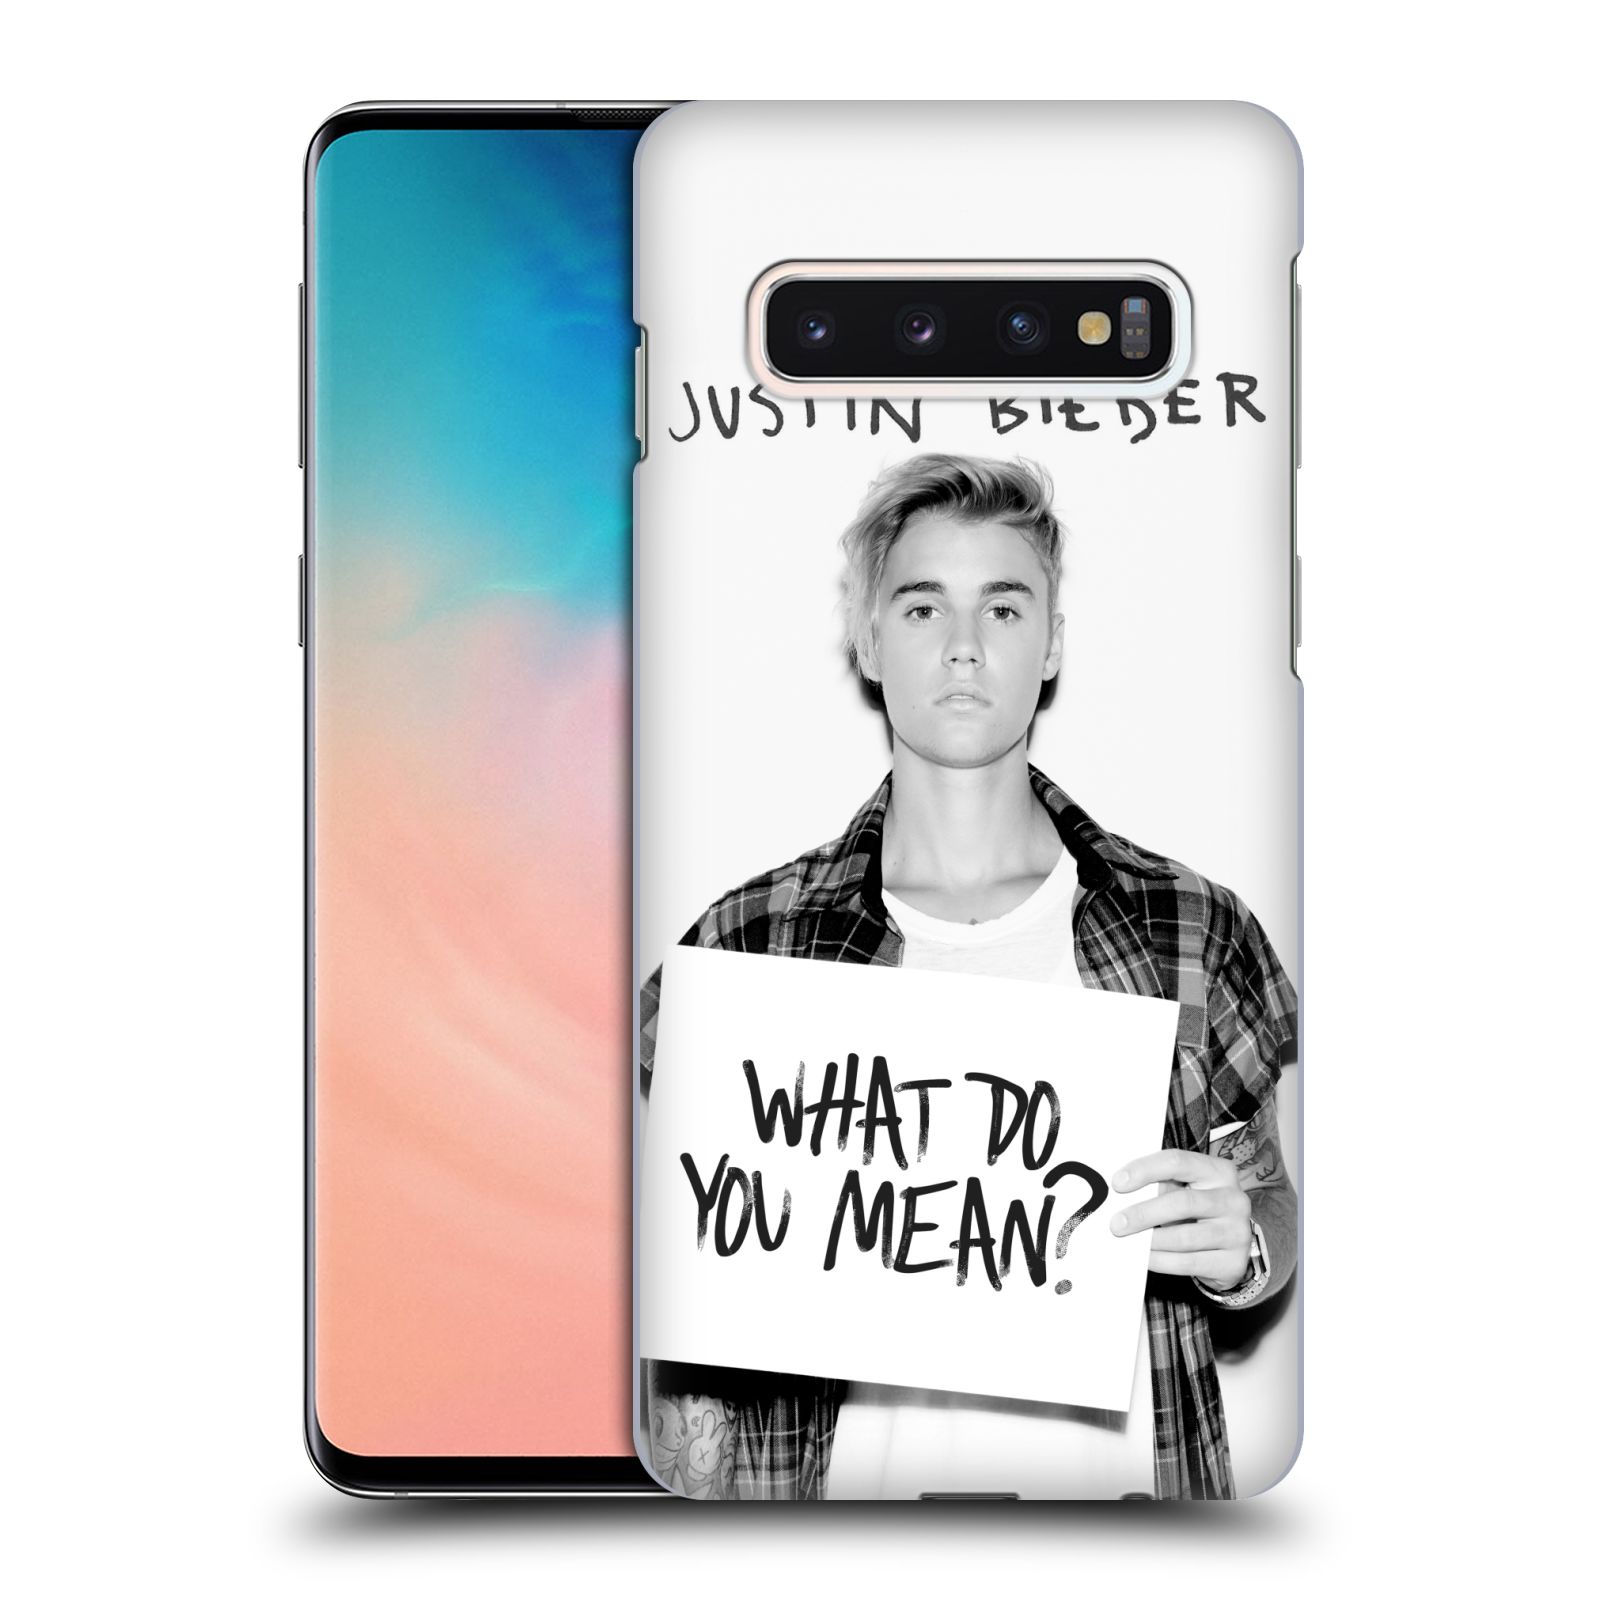 Pouzdro na mobil Samsung Galaxy S10 - HEAD CASE - Justin Bieber foto Purpose What do you mean